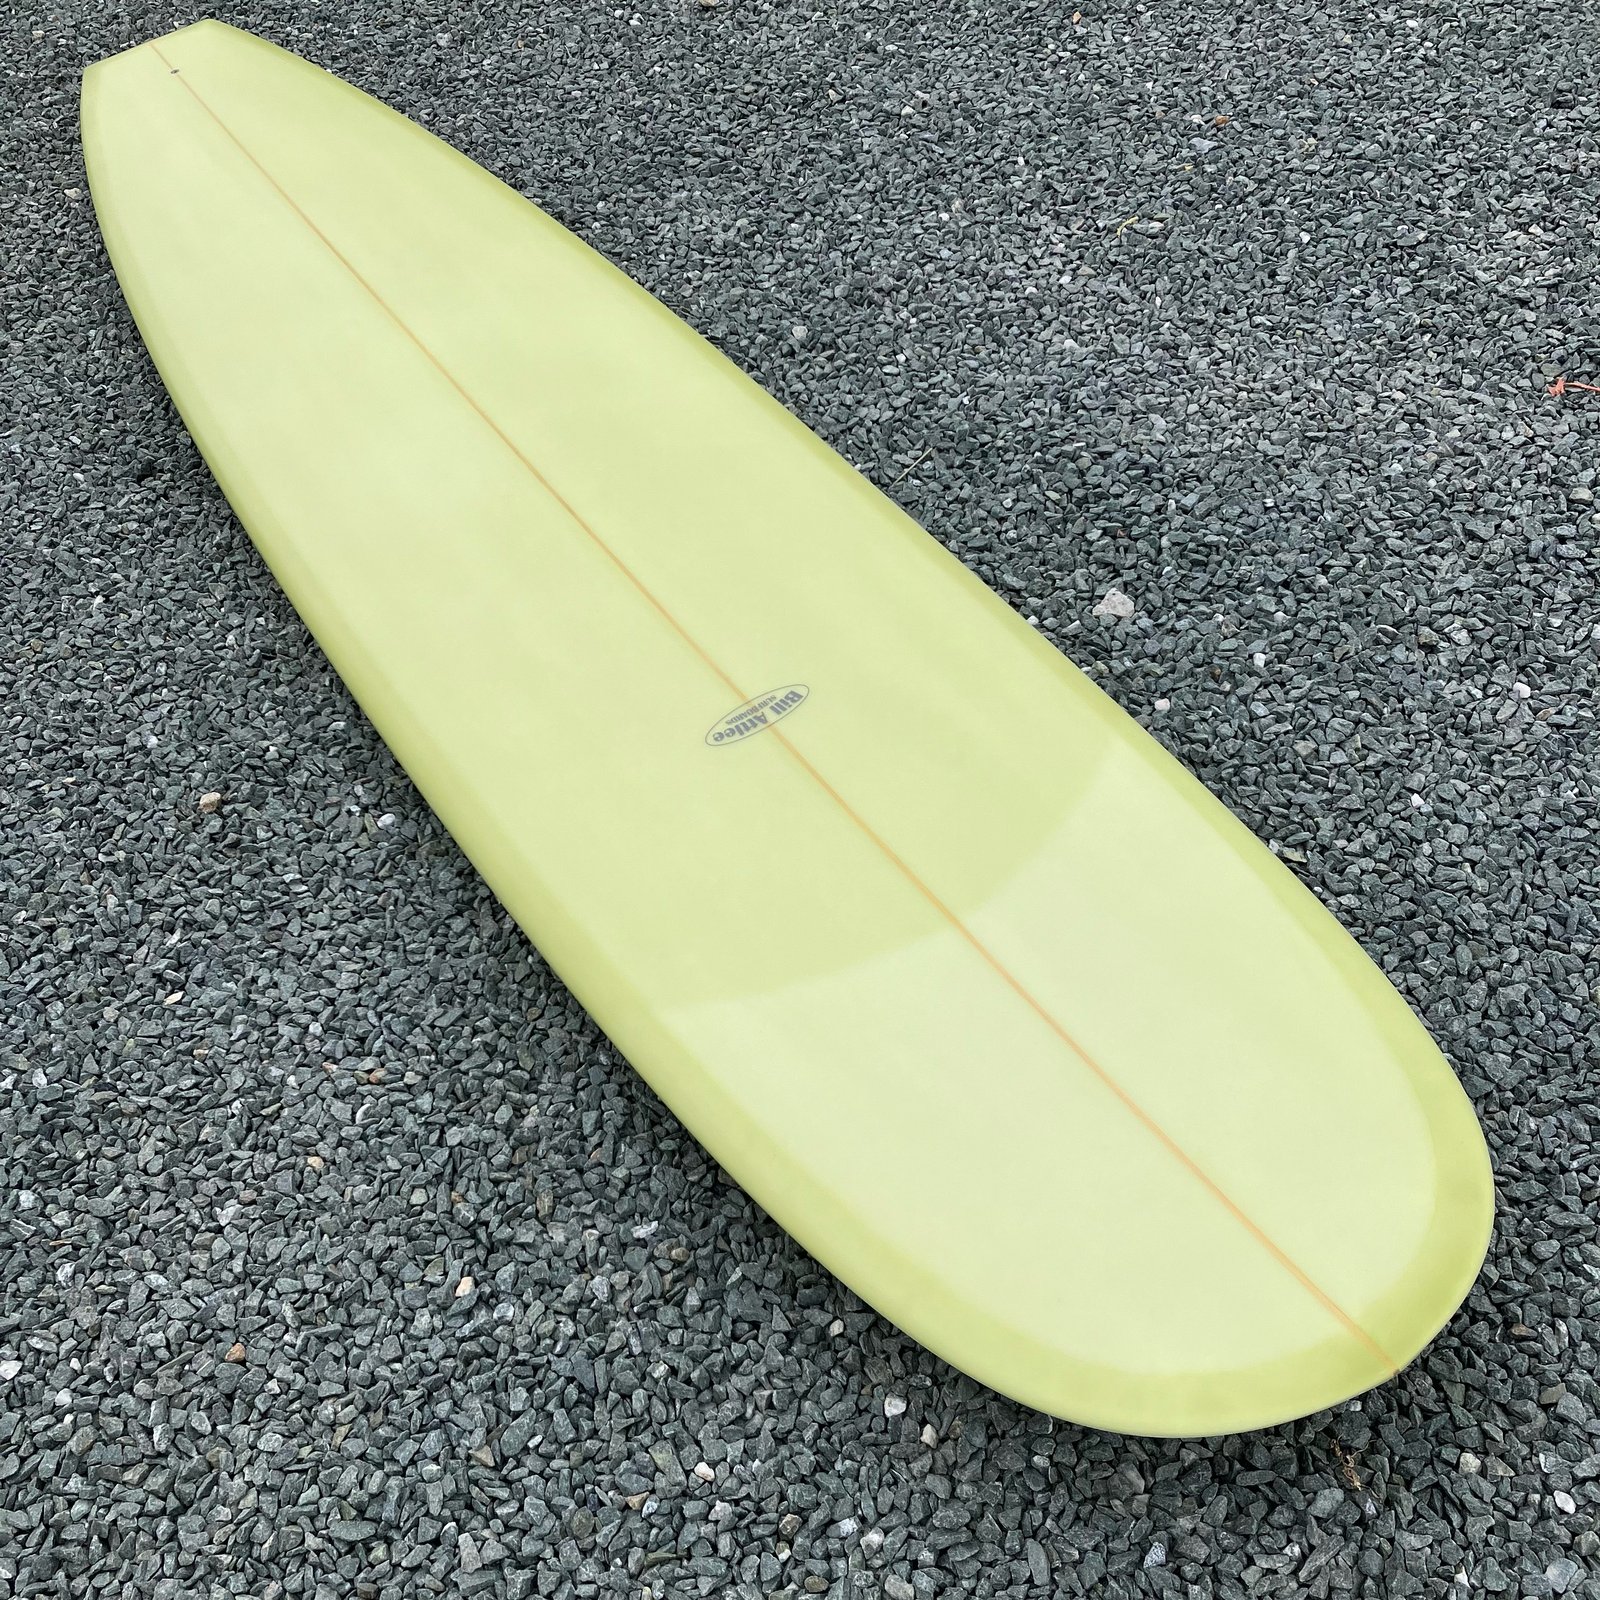 9'8 Stepper Nose Rider Longboard Surfboard | escapesurfboards